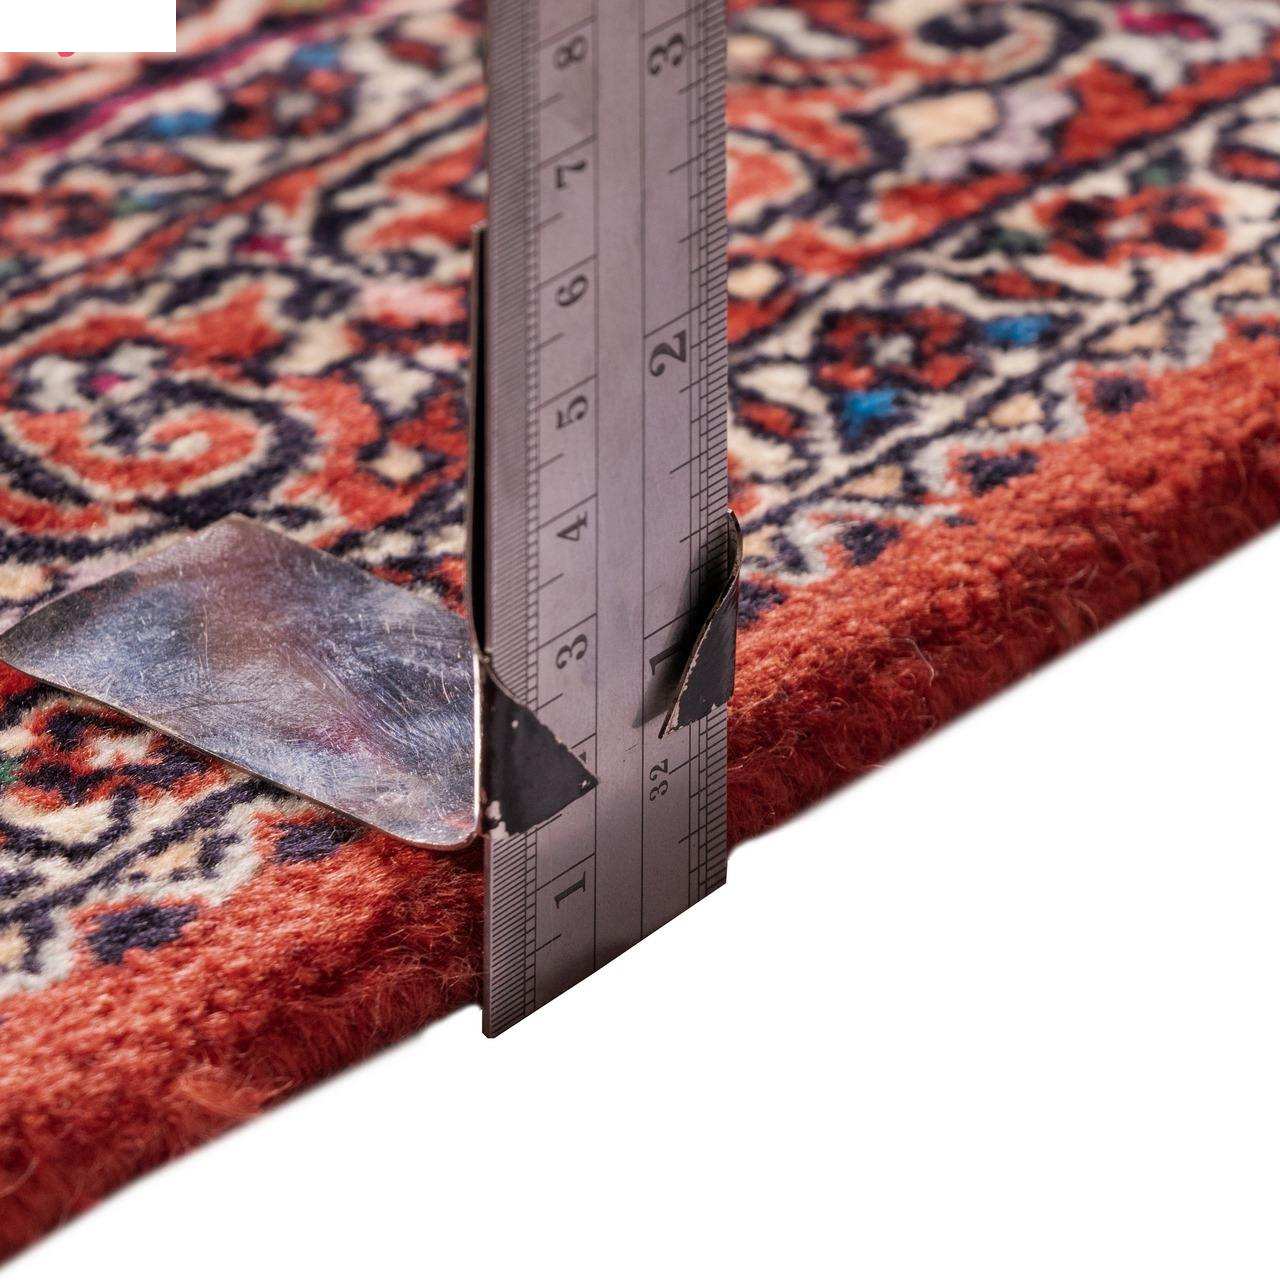 Twelve meter handmade carpet by Persia, code 187118